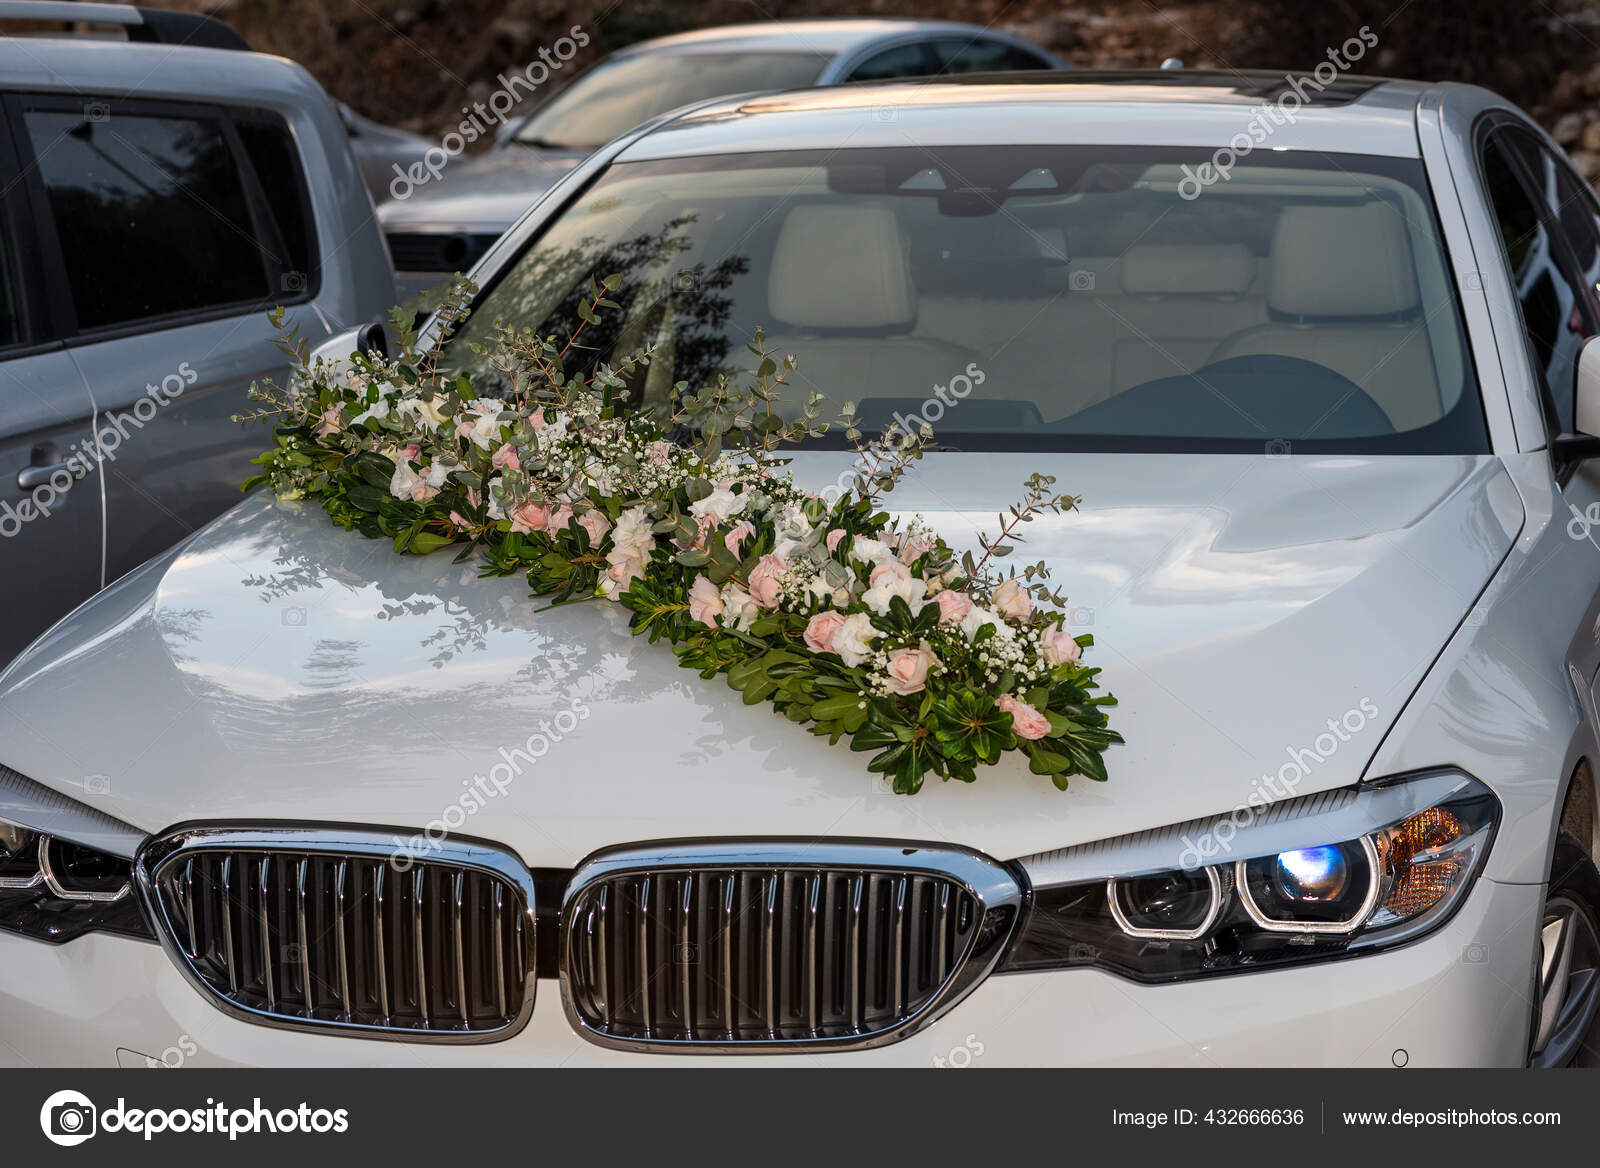 Wedding Decoration Car Flower Arrangement Hood Car White Car